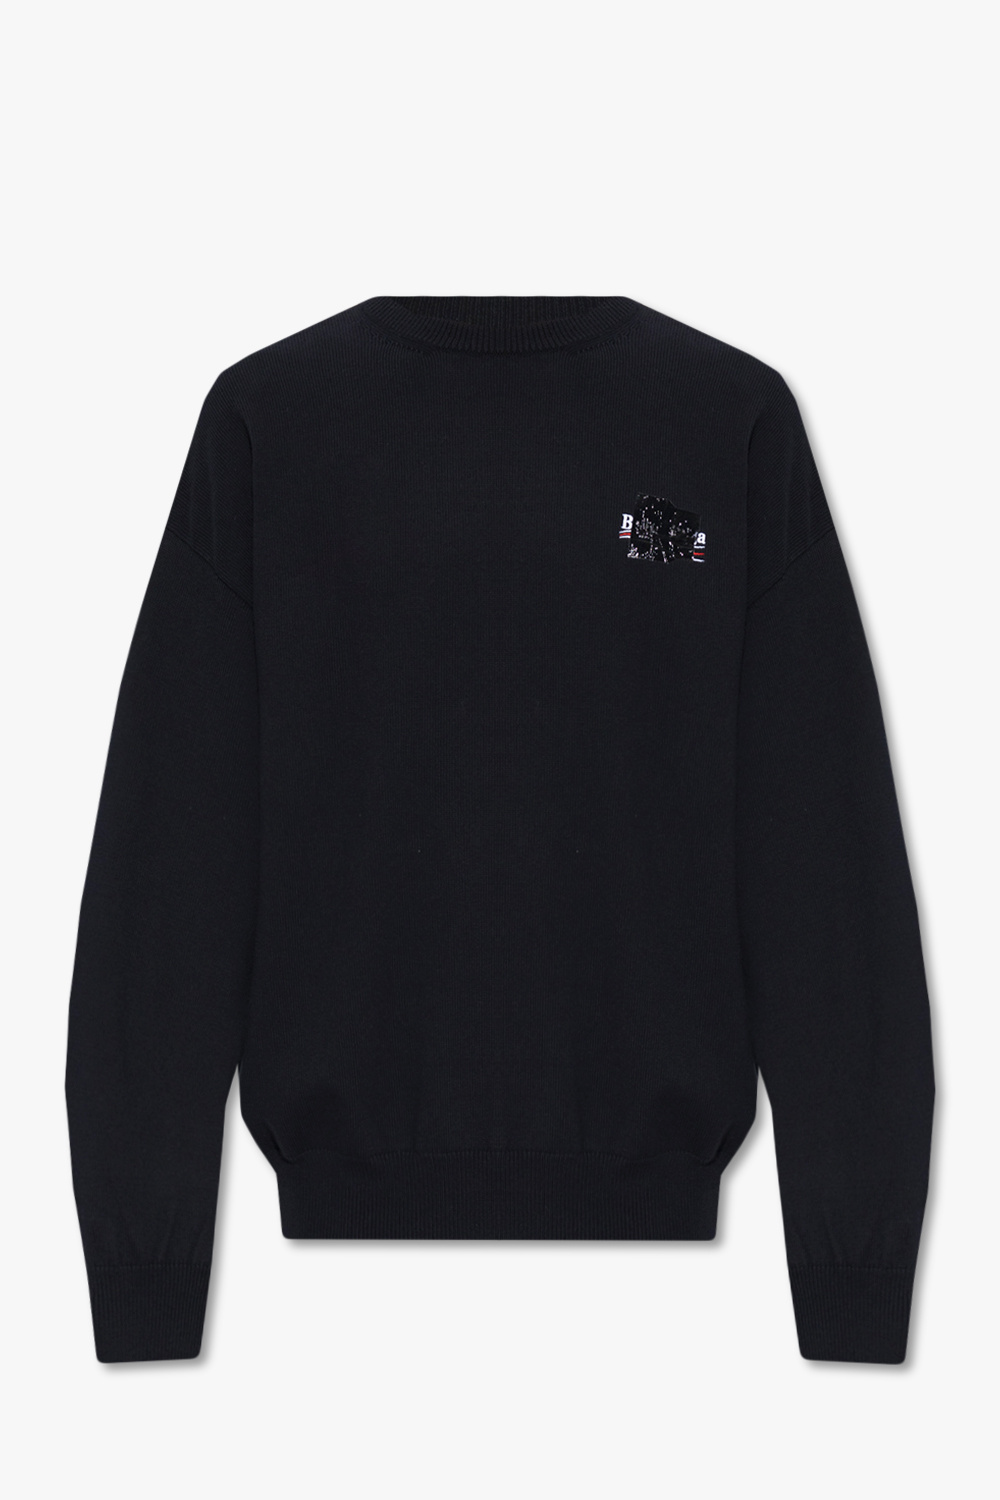 Balenciaga cropped hoodie adidas by stella mccartney sweater black